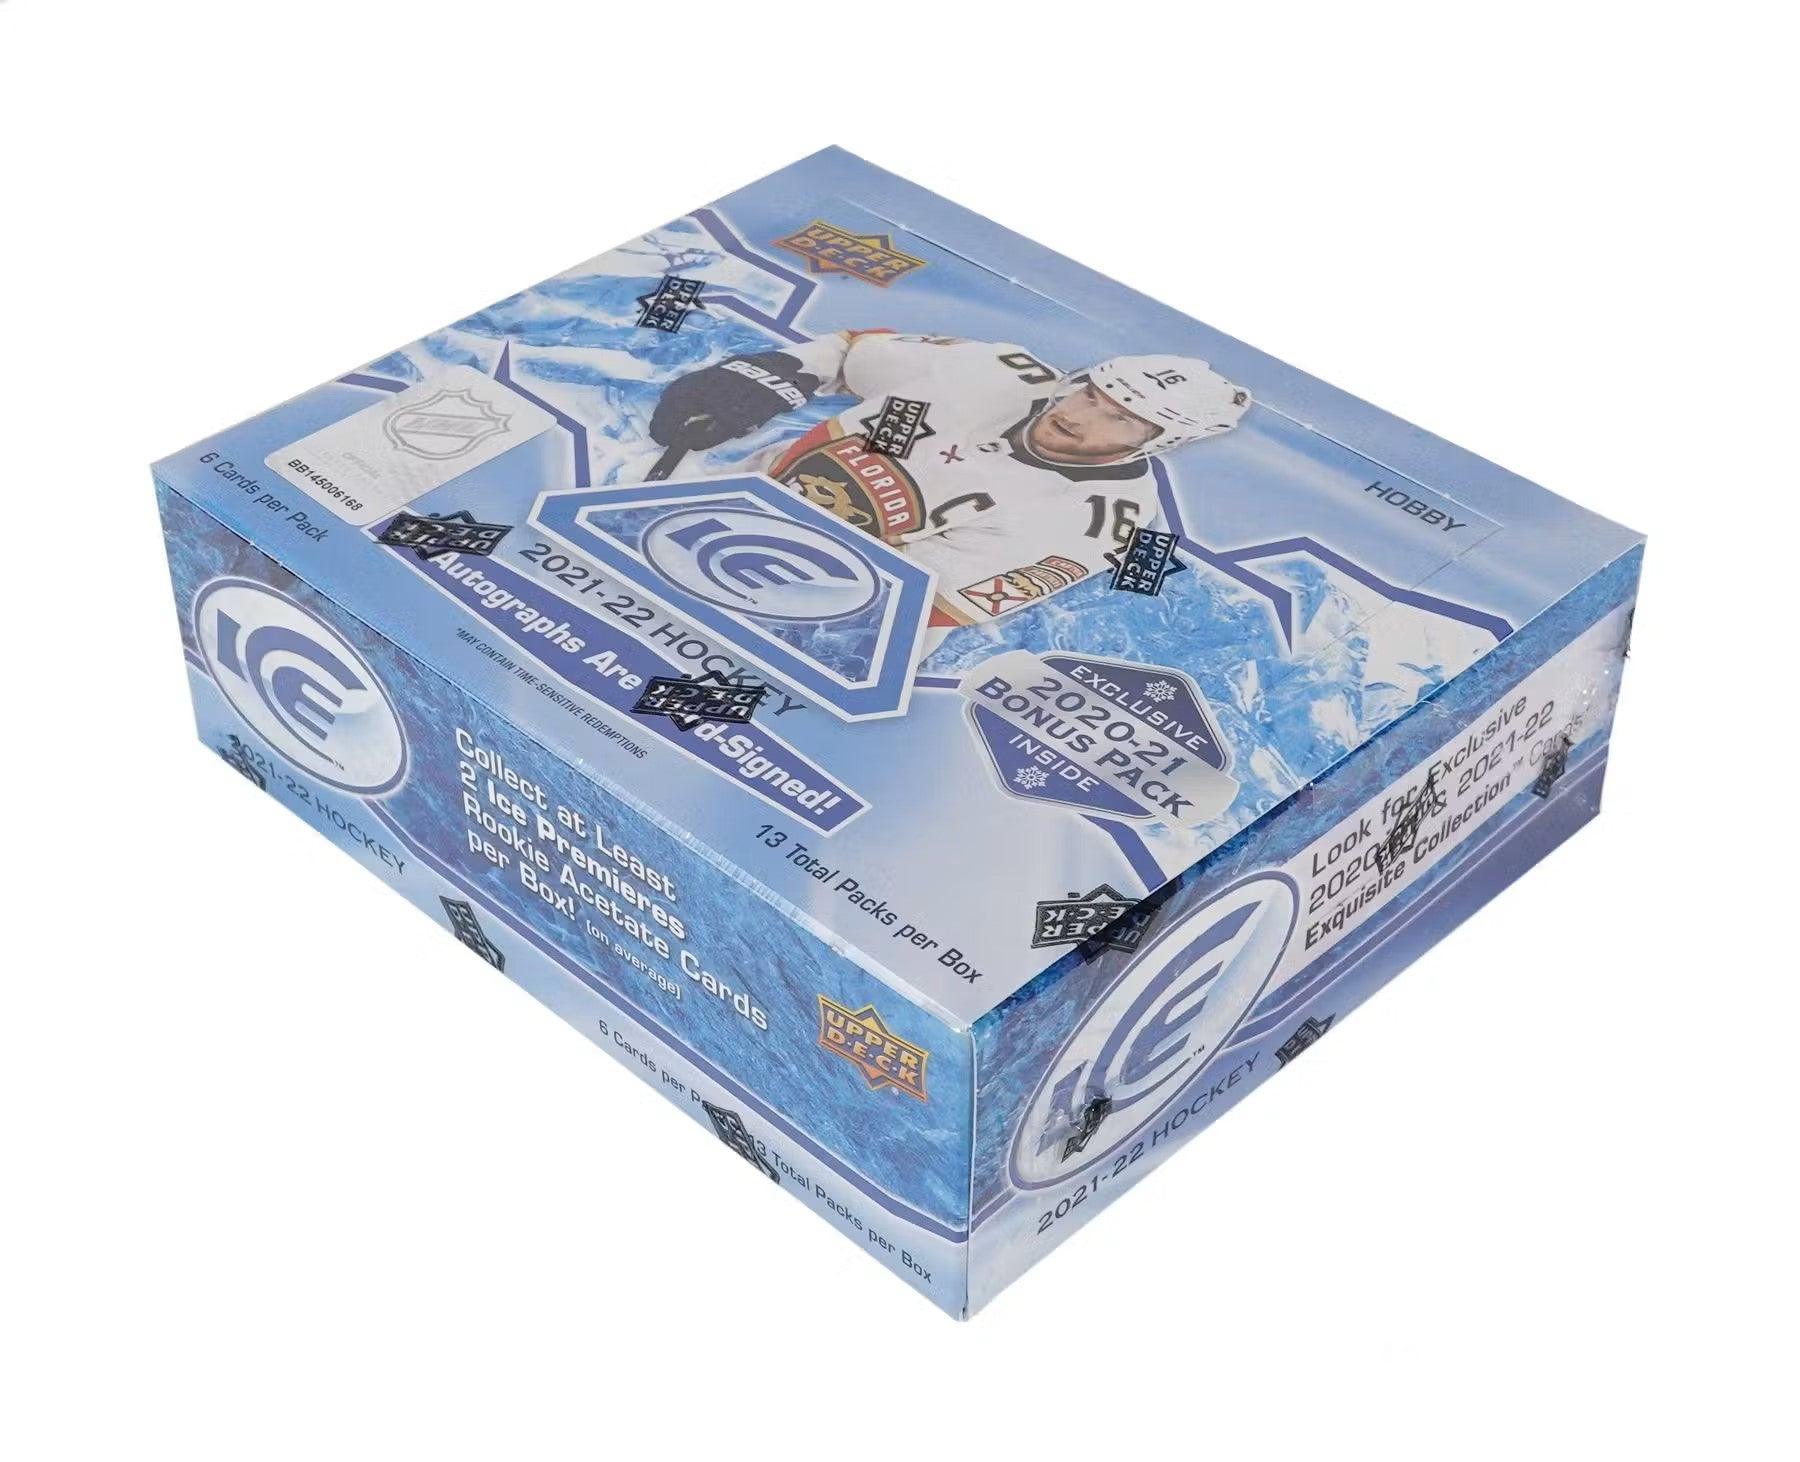 Hockey - 2021/22 - Upper Deck ICE - Hobby Box (12 Packs) - Hobby Champion Inc